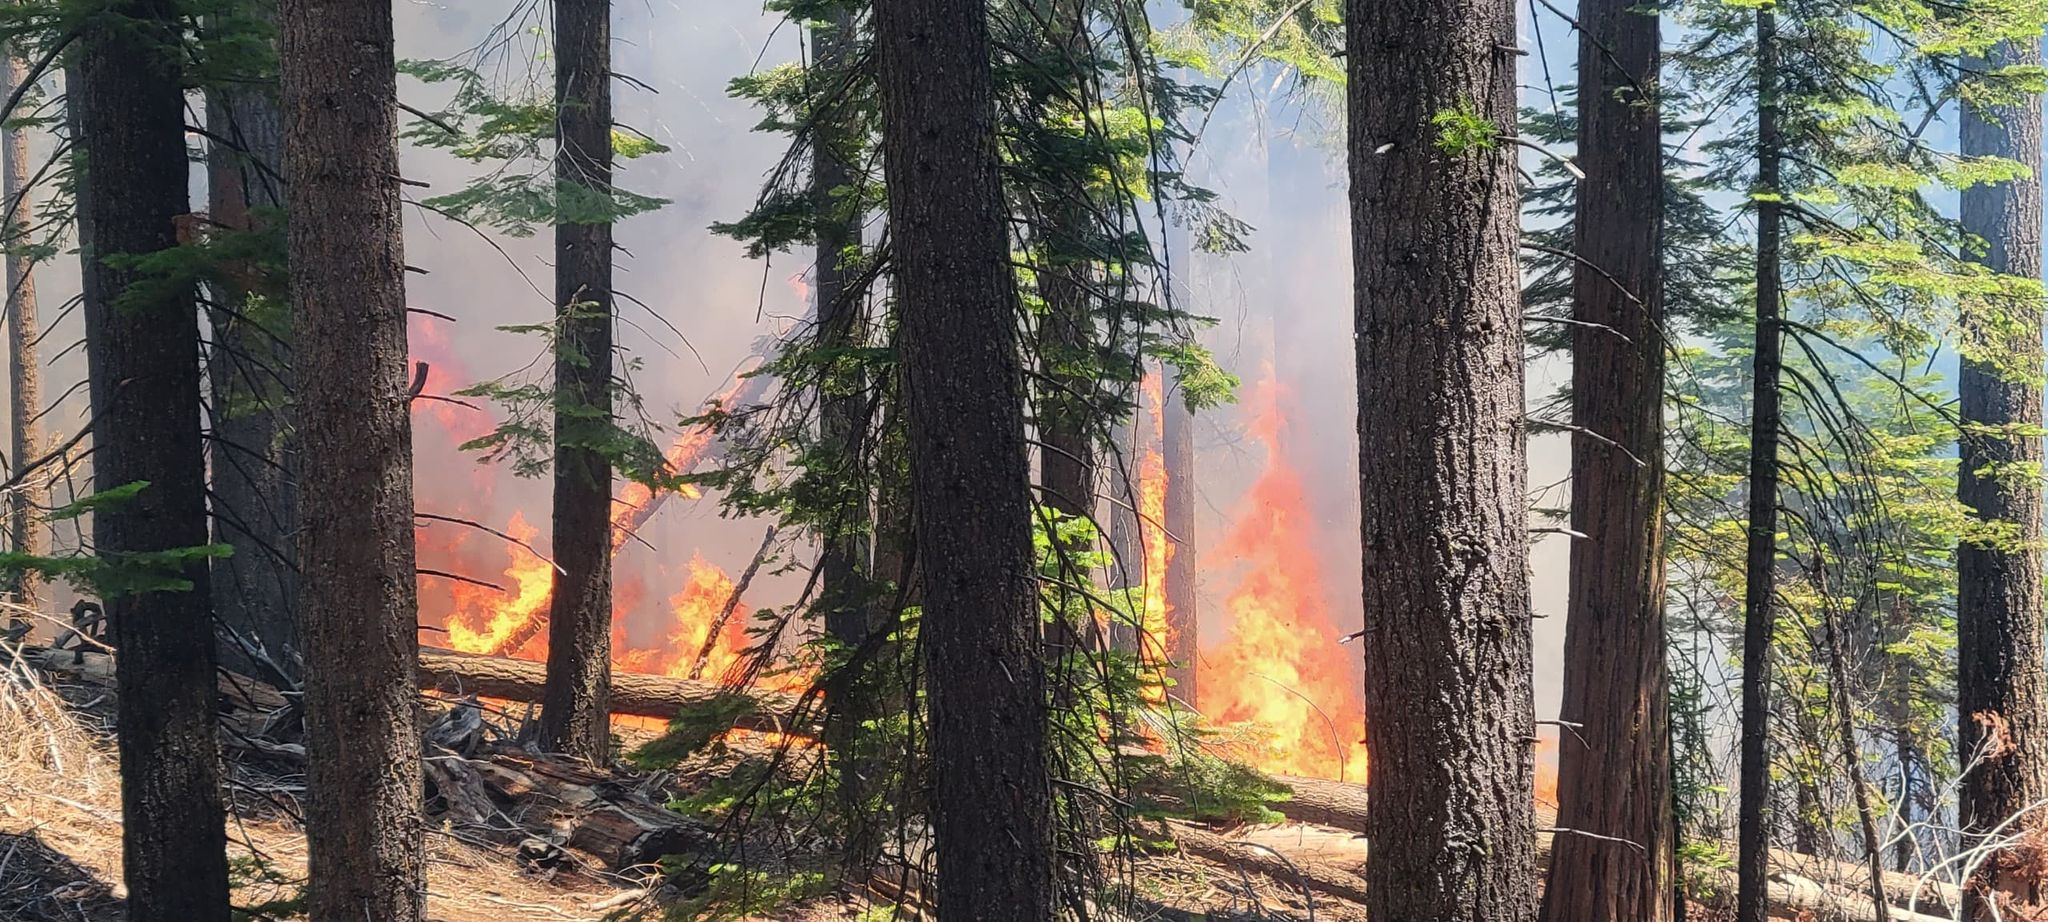 The Washburn Fire burning near the Mariposa Grove sequioas in Yosemite National Park